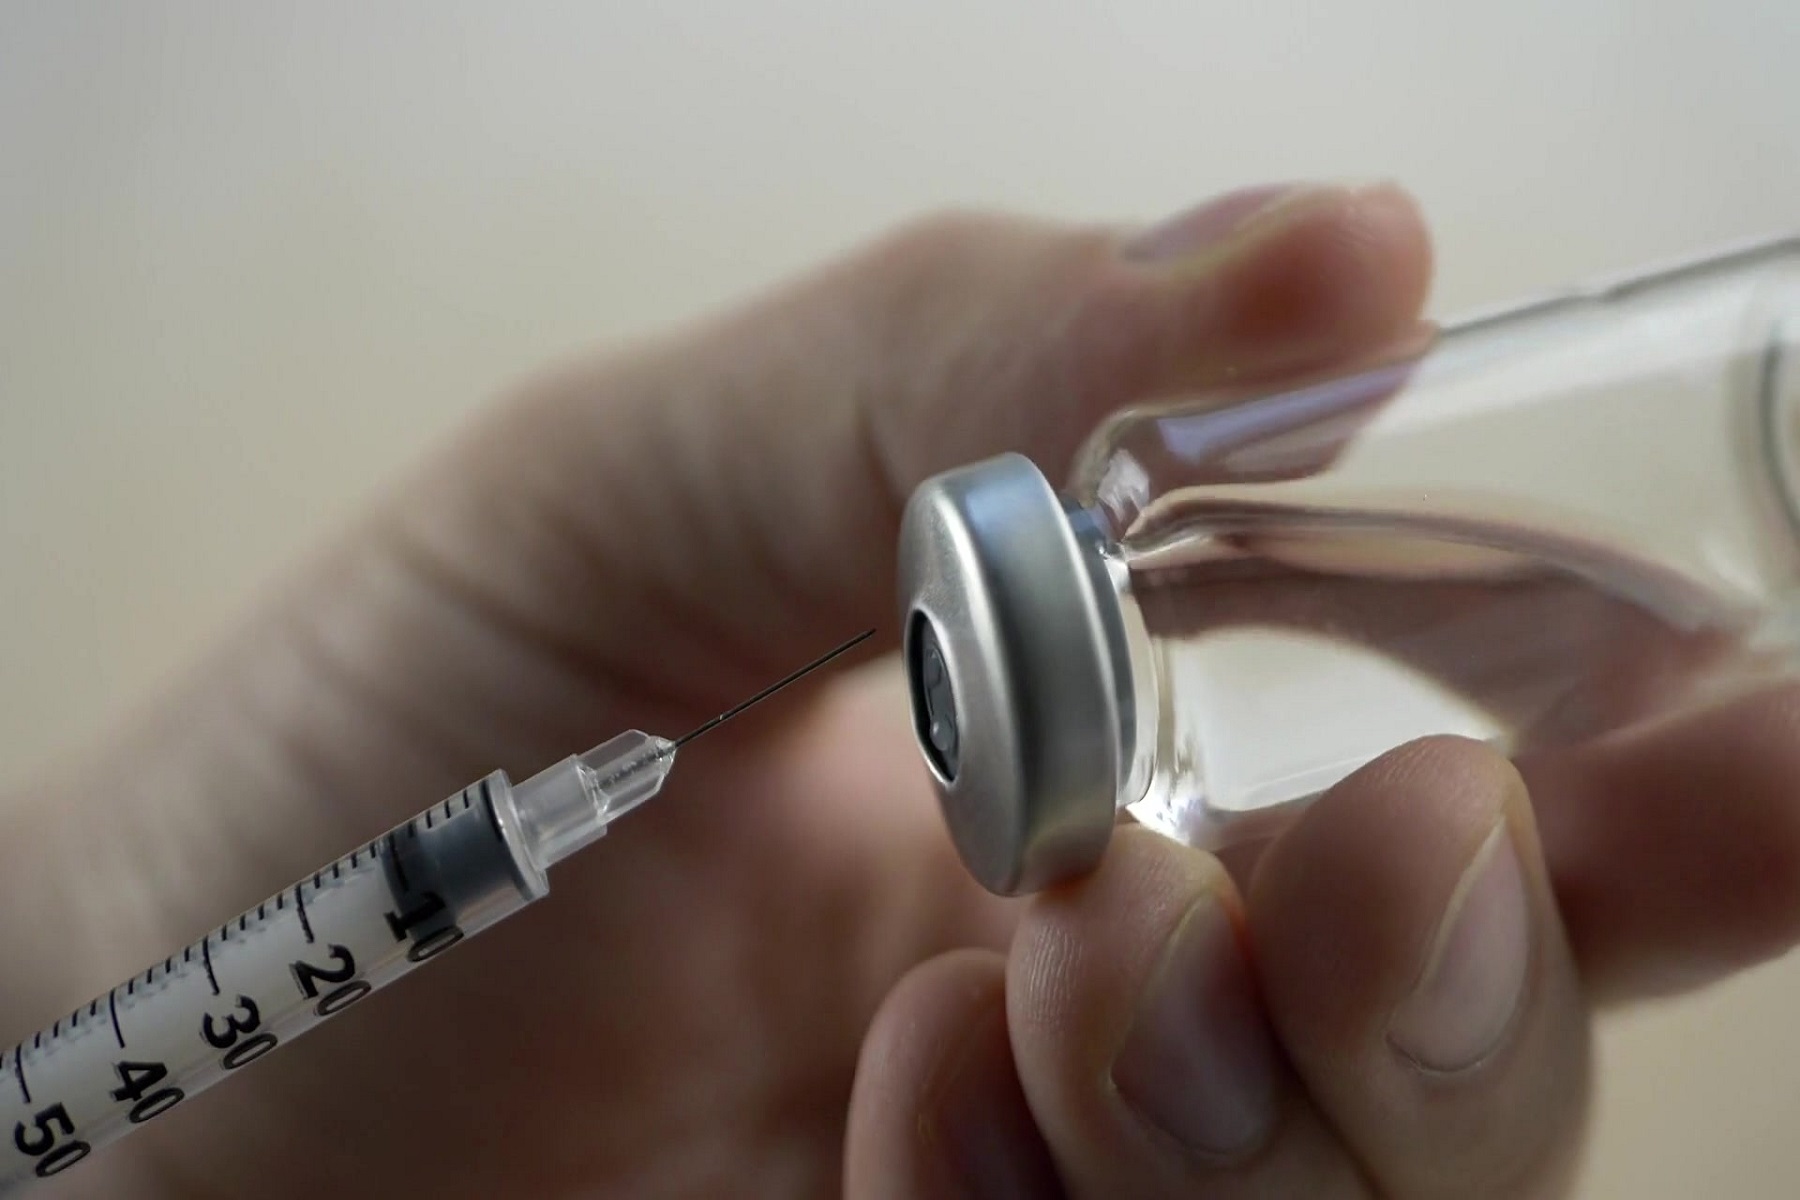 FDA ΗΠΑ: Επικείμενες αναφορές έγκρισης έκτακτης ανάγκης αναμνηστικών εμβολίων covid για άτομα σε ανοσοκαταστολή